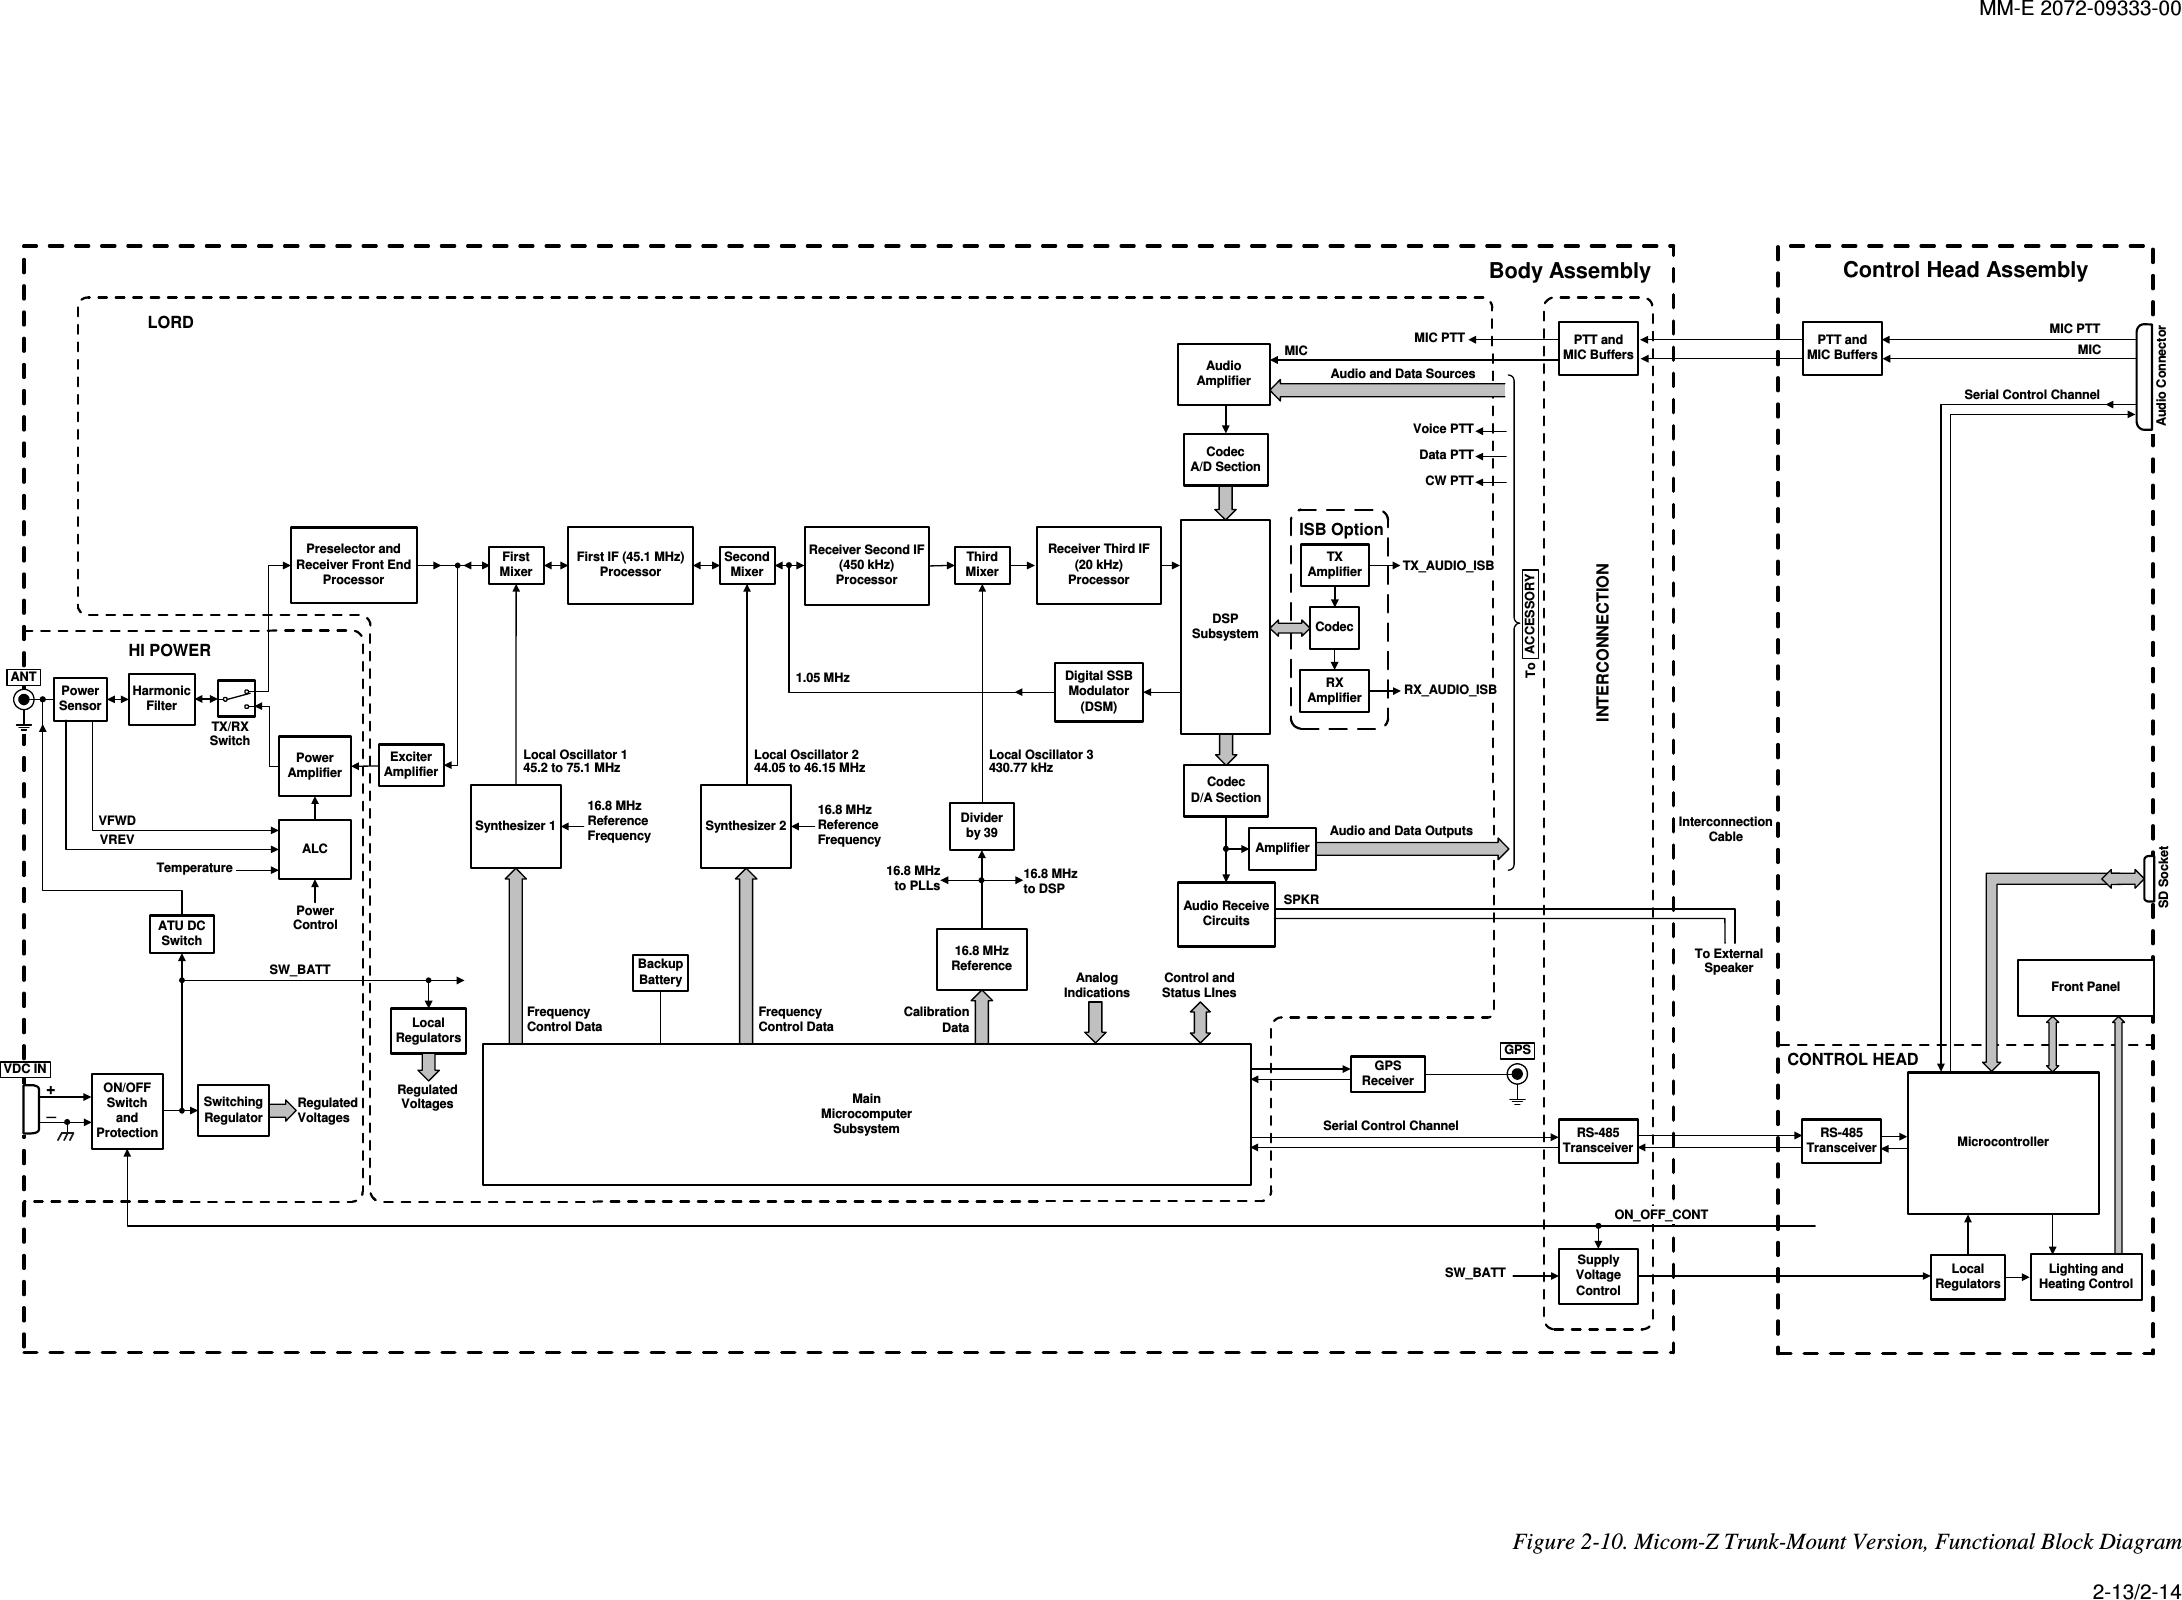 wiring diagram tadiran rmi - Wiring Diagram